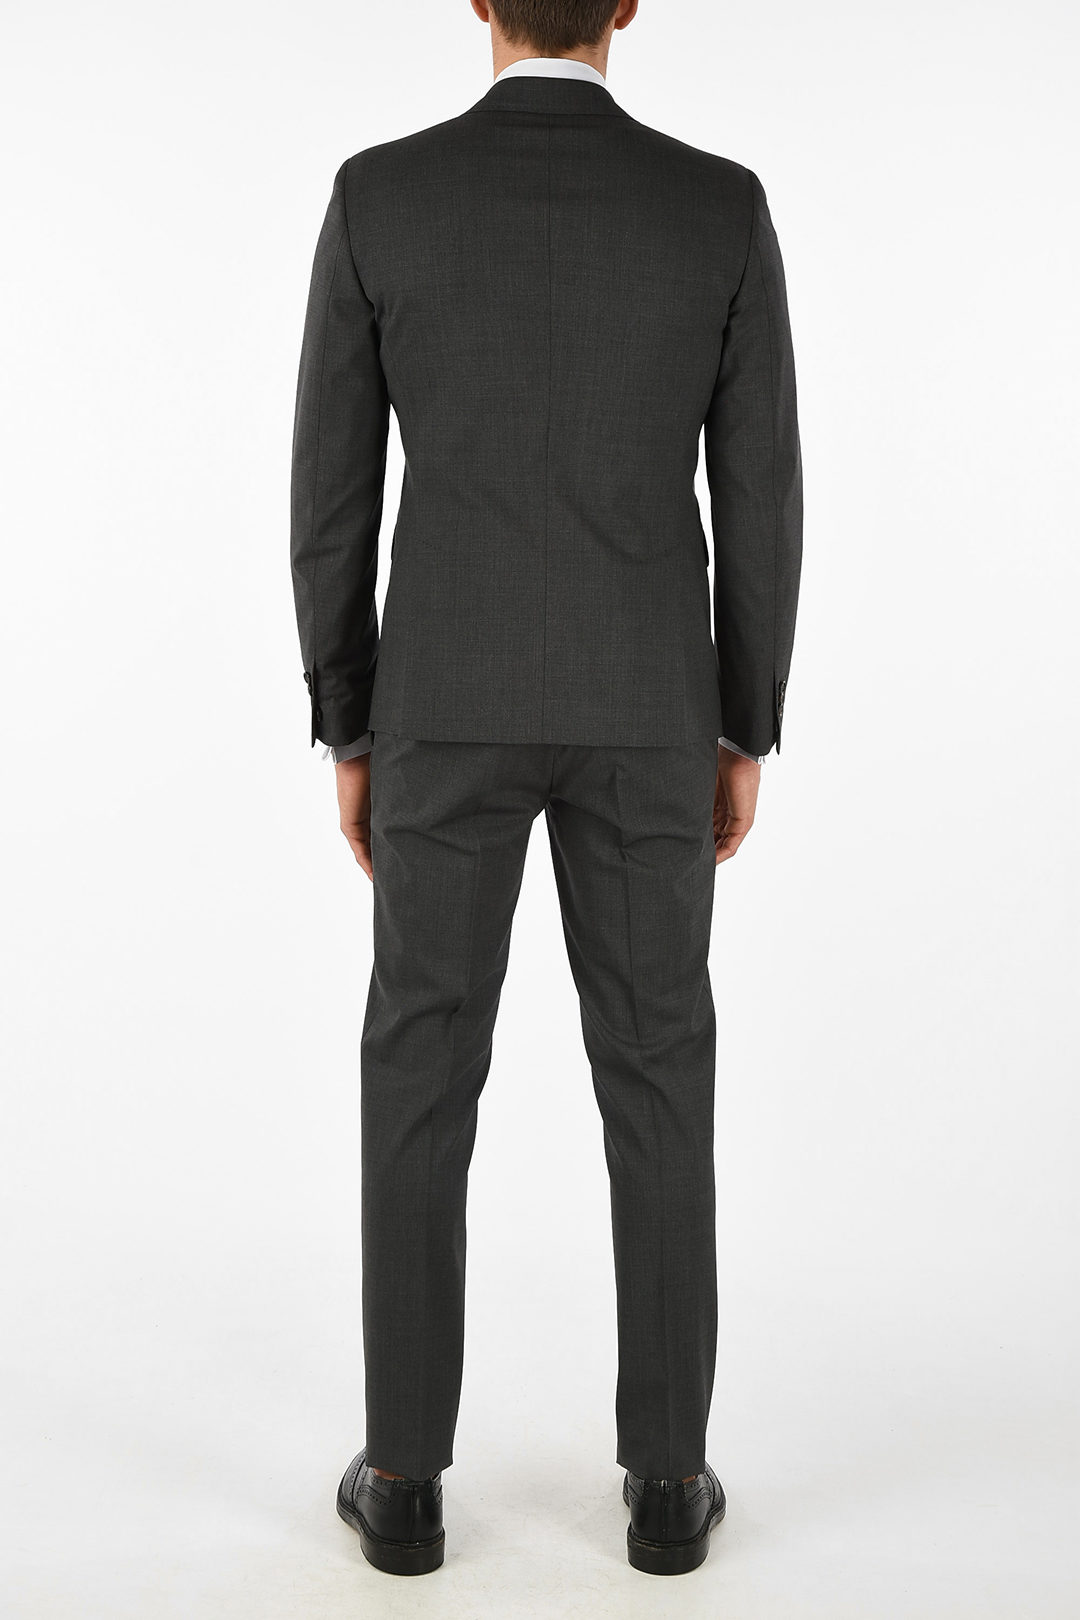 virgin-wool-blend-side-vents-suit-2-button-manchester-suit_677787_zoom.jpg